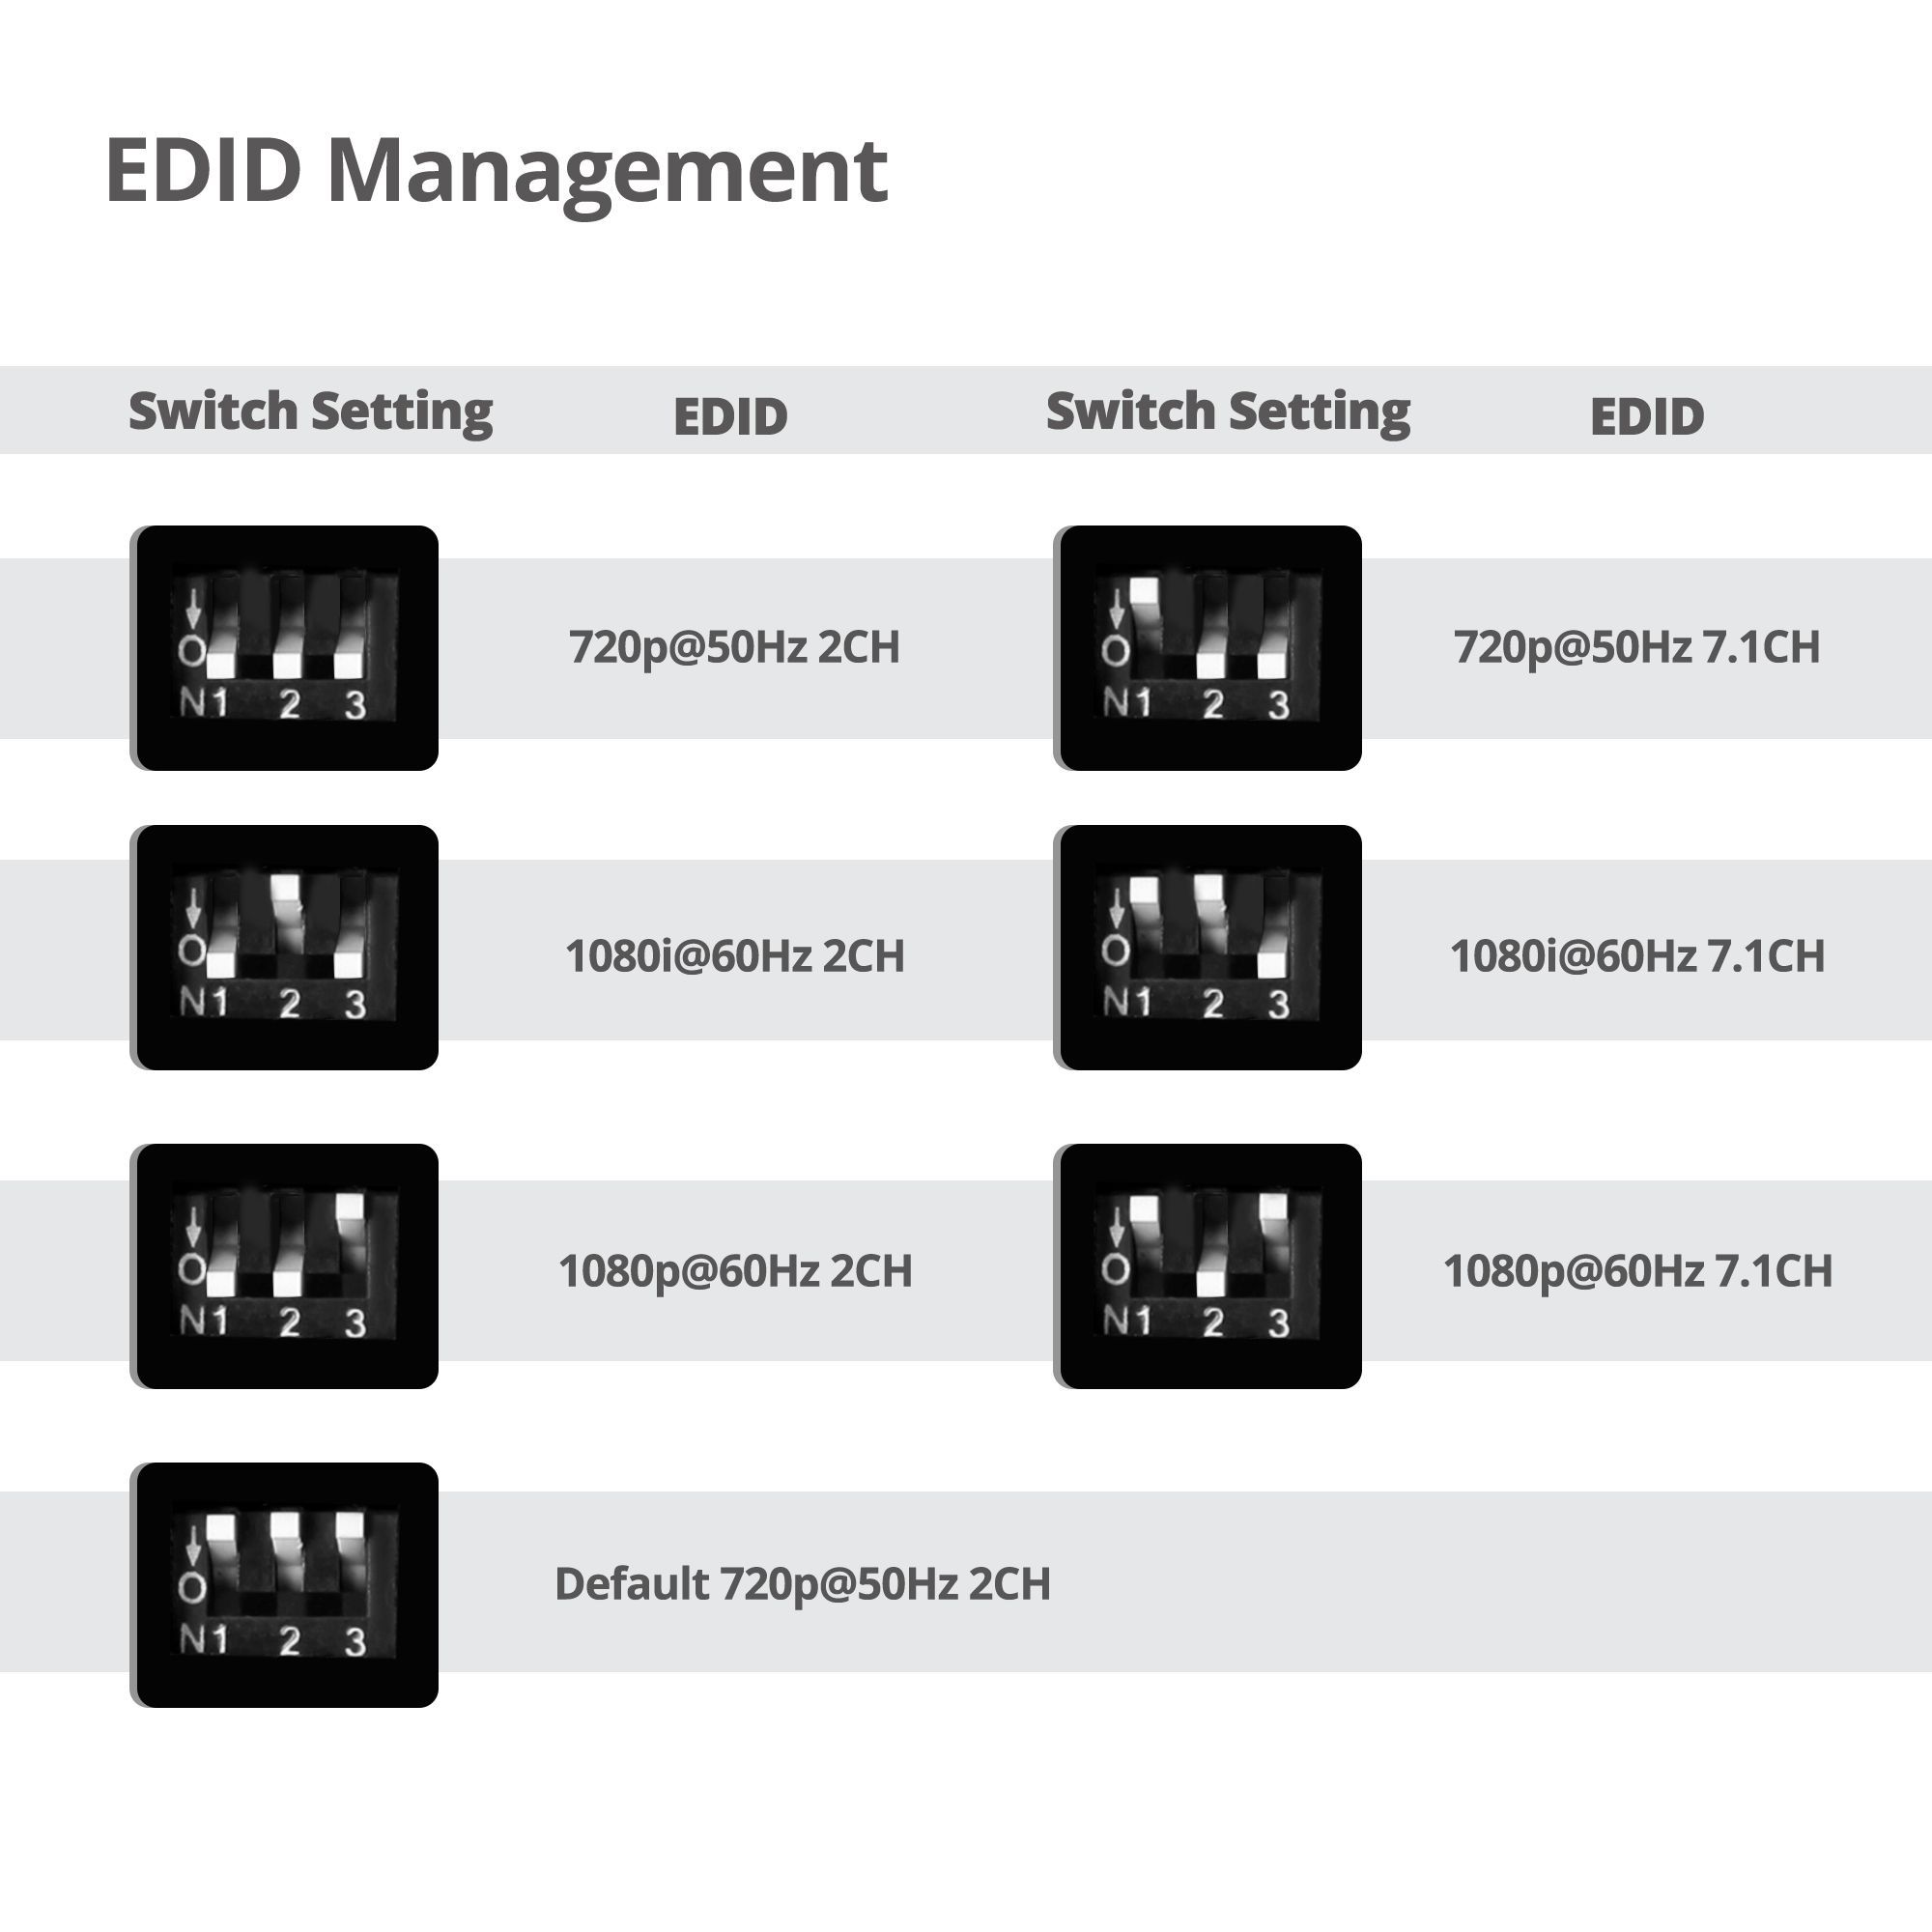 EDID management